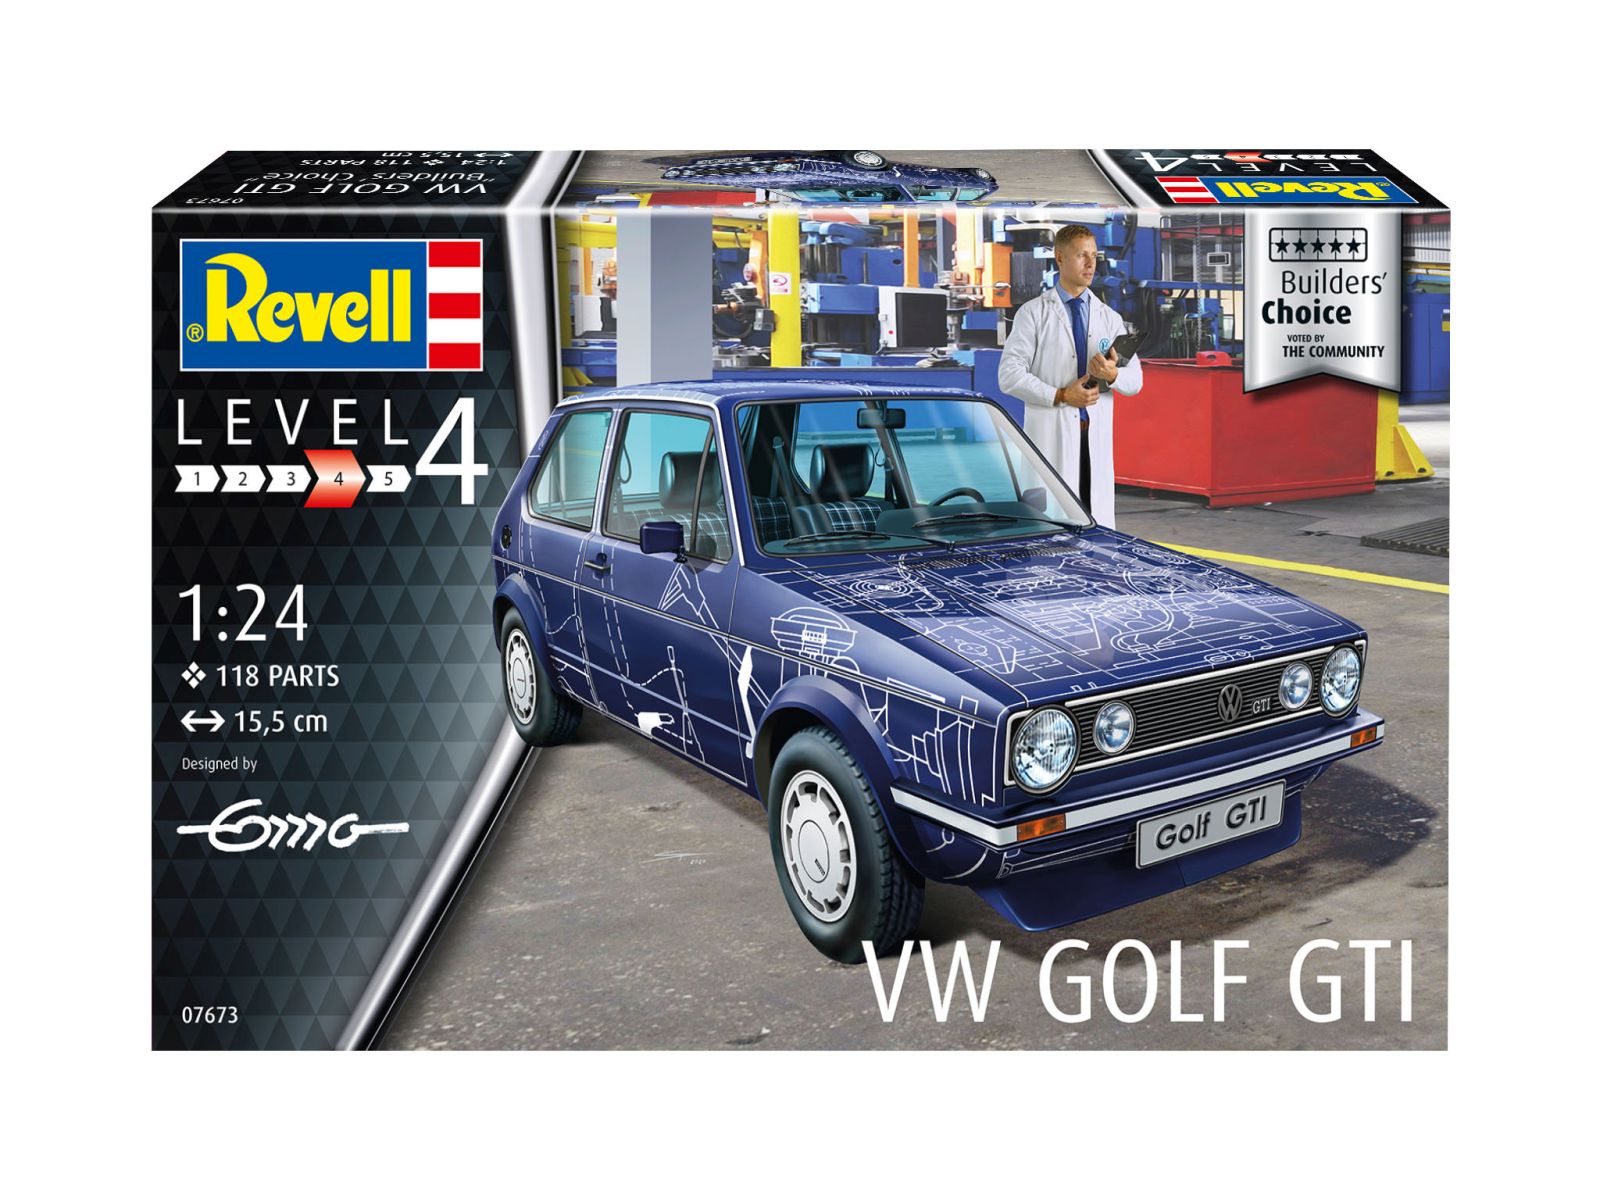 Revell 07673 - VW Golf Gti "Builders Choice"